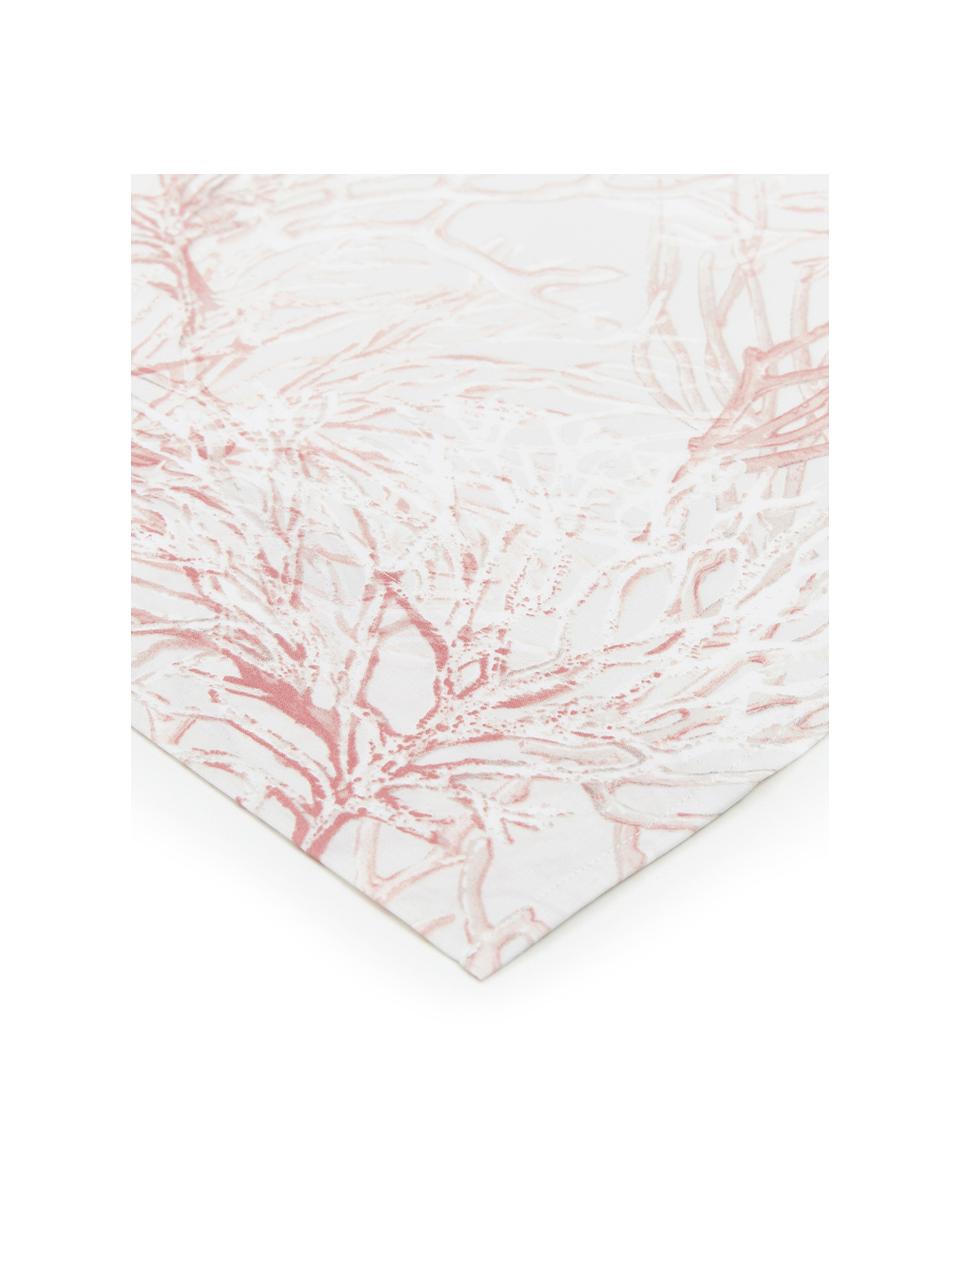 Set lenzuola in percalle Atollo, Tessuto: percalle Il percalle è un, Rosa, 250 x 290 cm + 2 federe + 1 lenzuolo con angoli